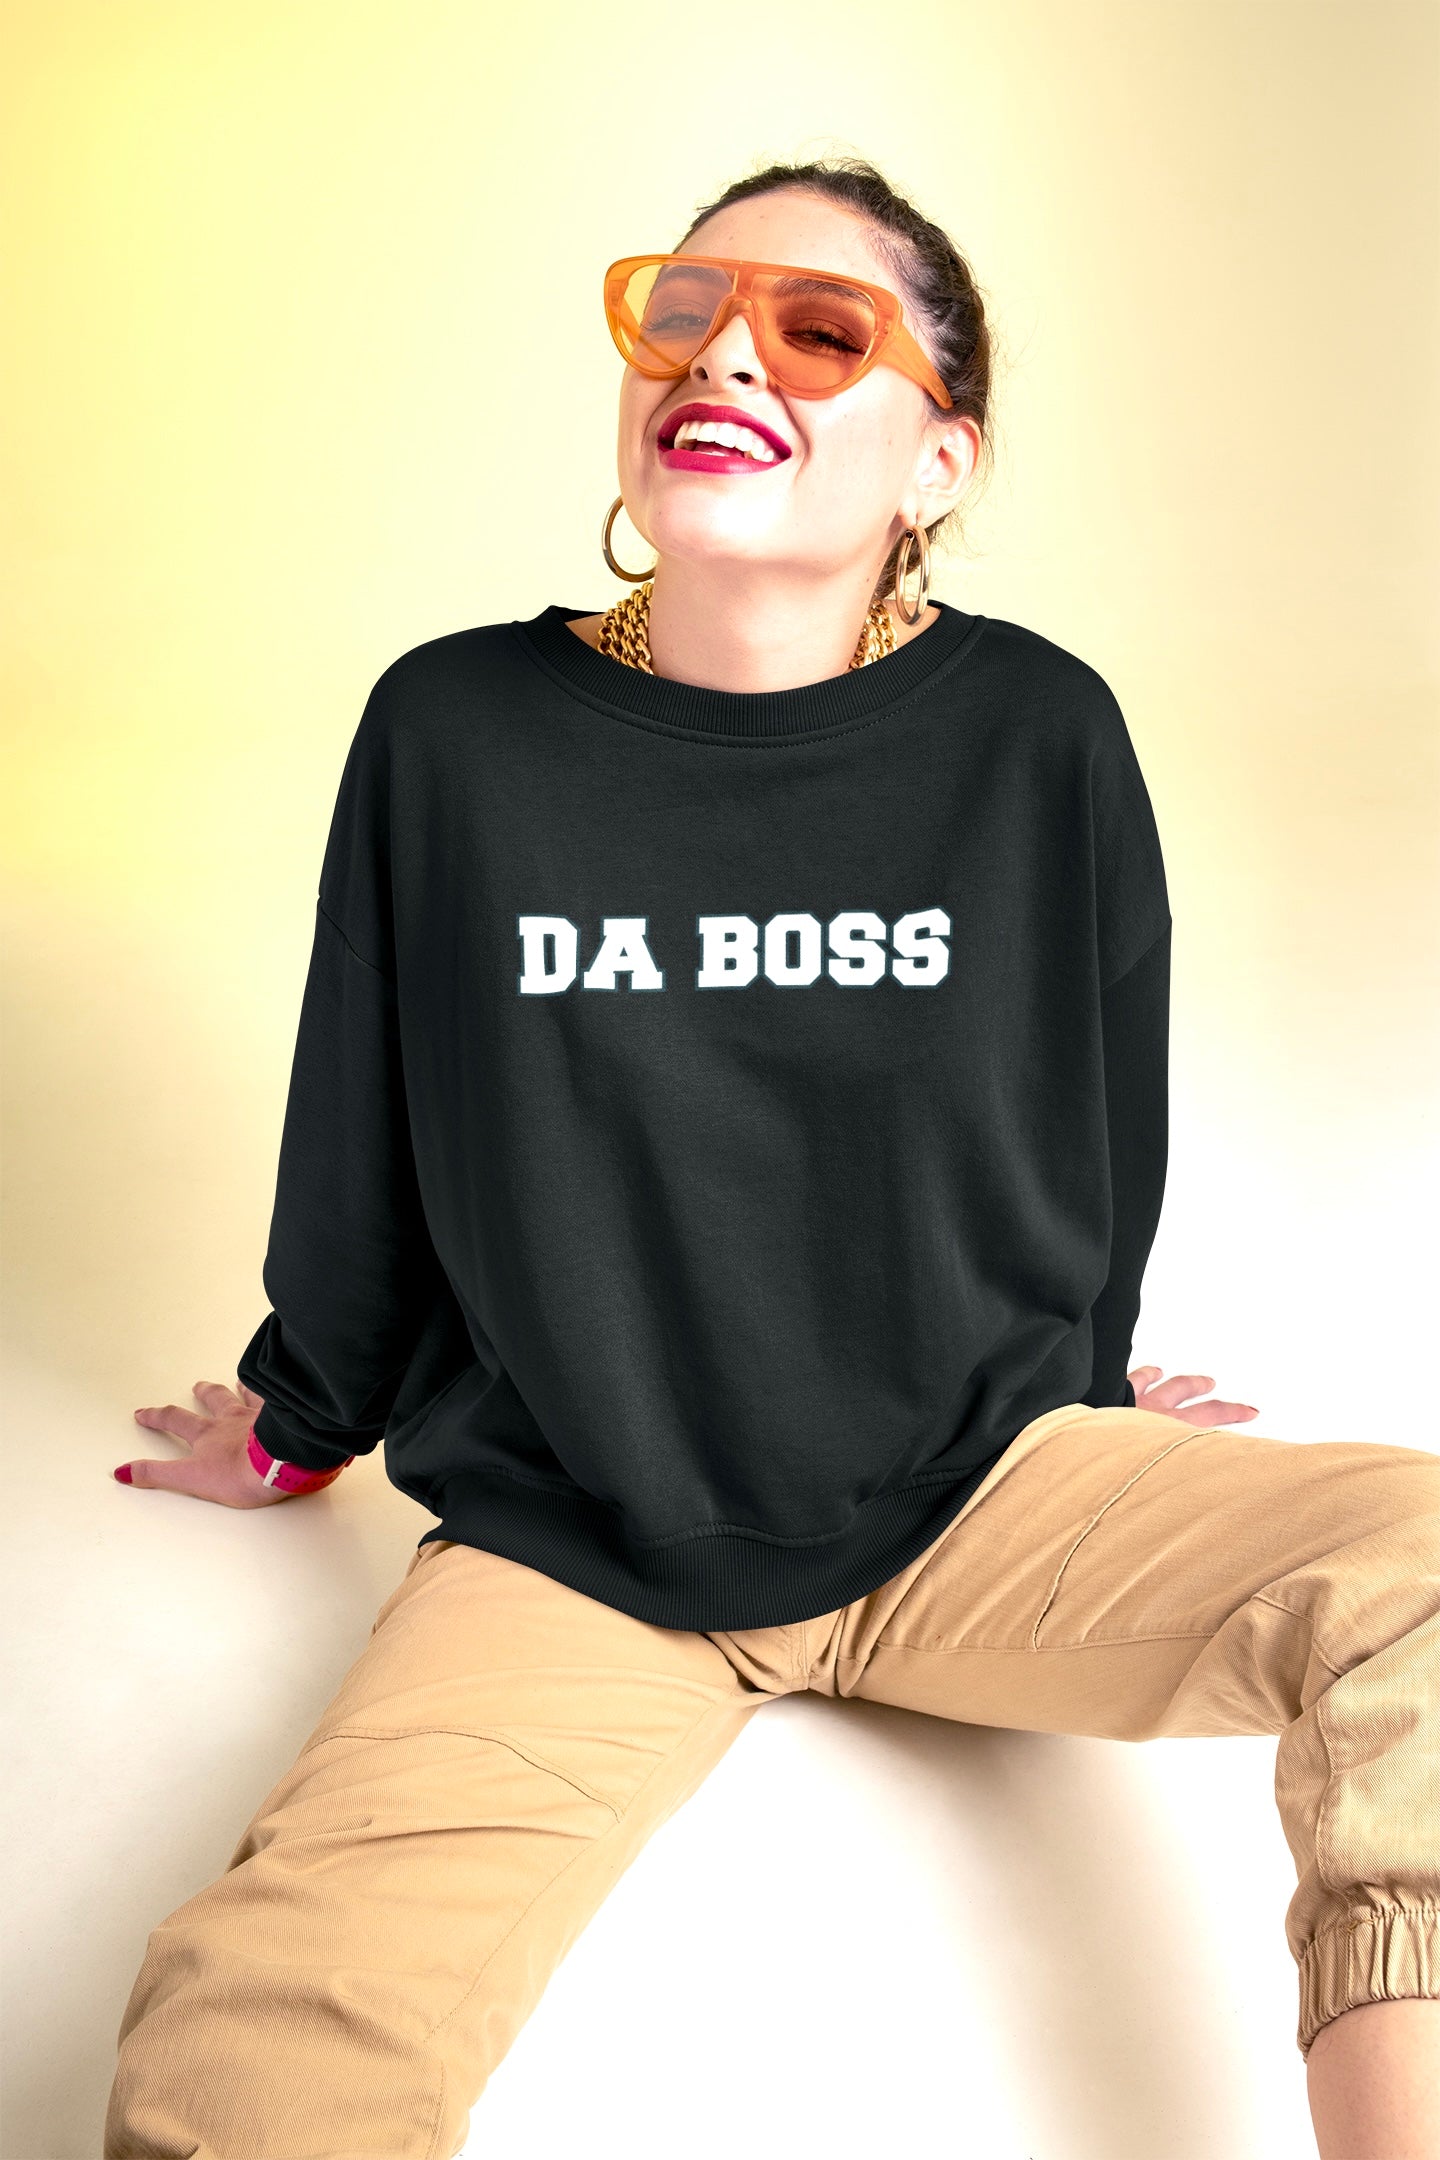 DA BOSS - Champion Sweatshirt - Beats 4 Hope